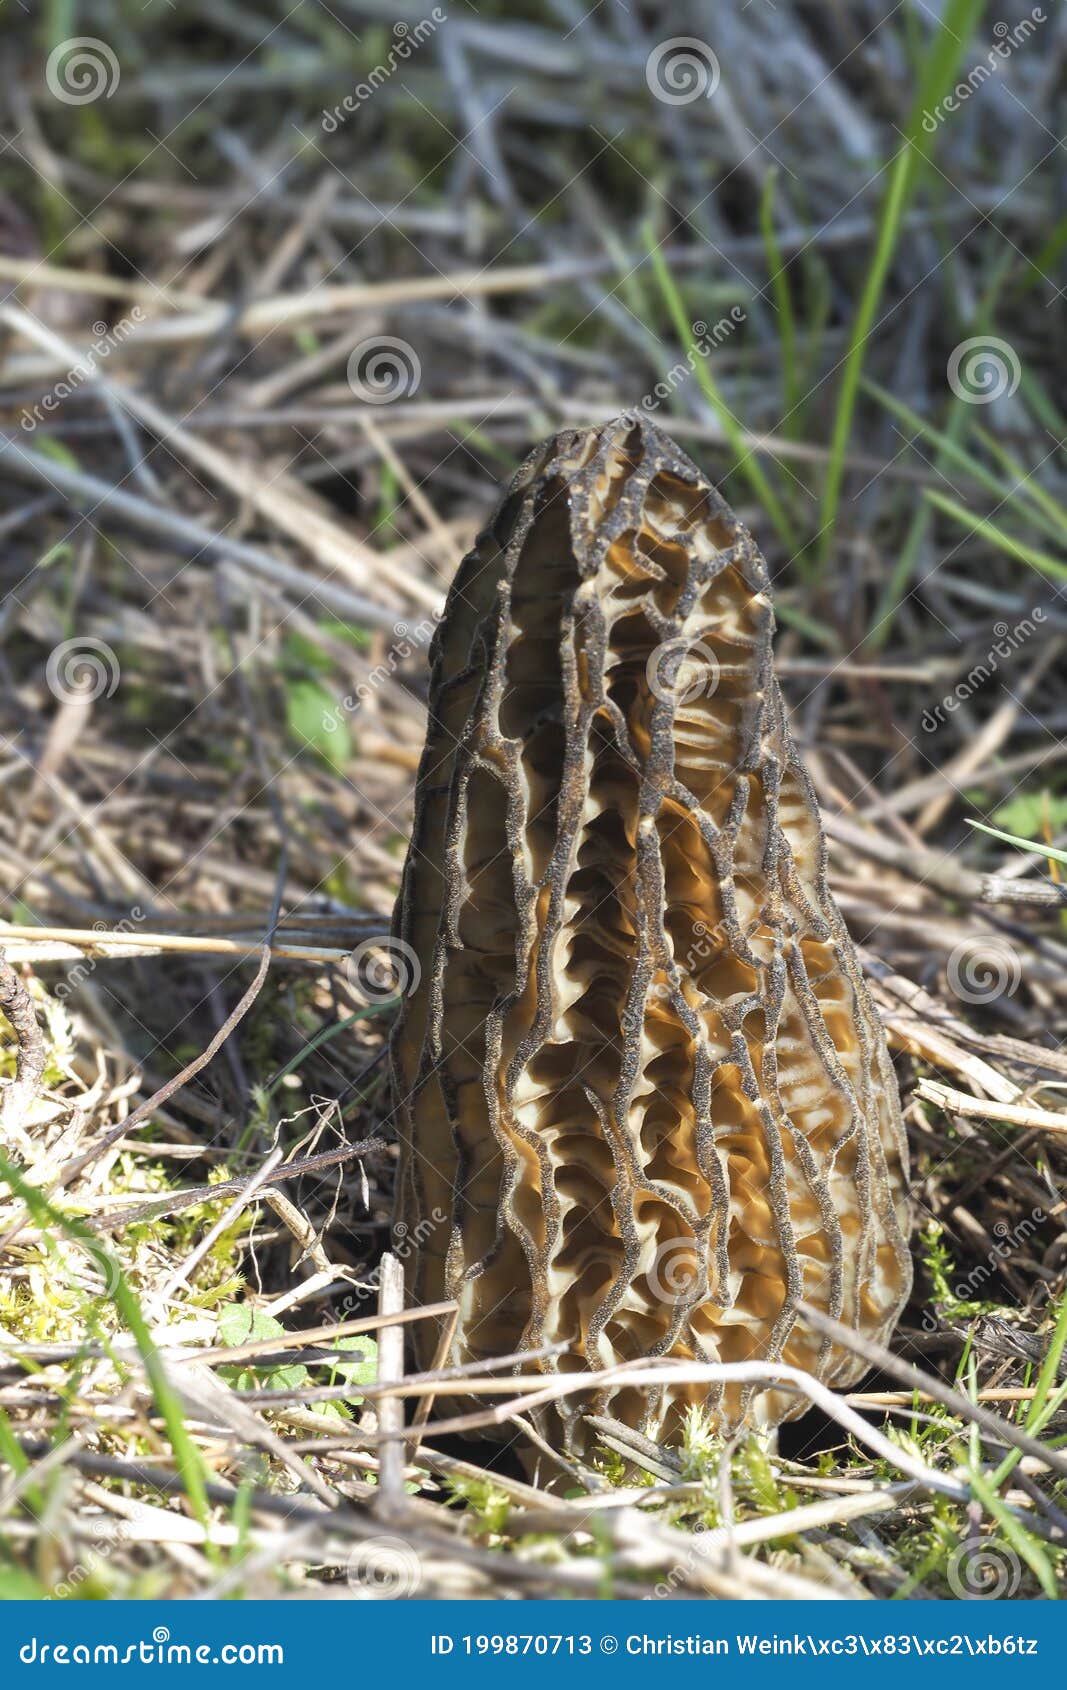 the black morel morchella elata is an edible mushroom